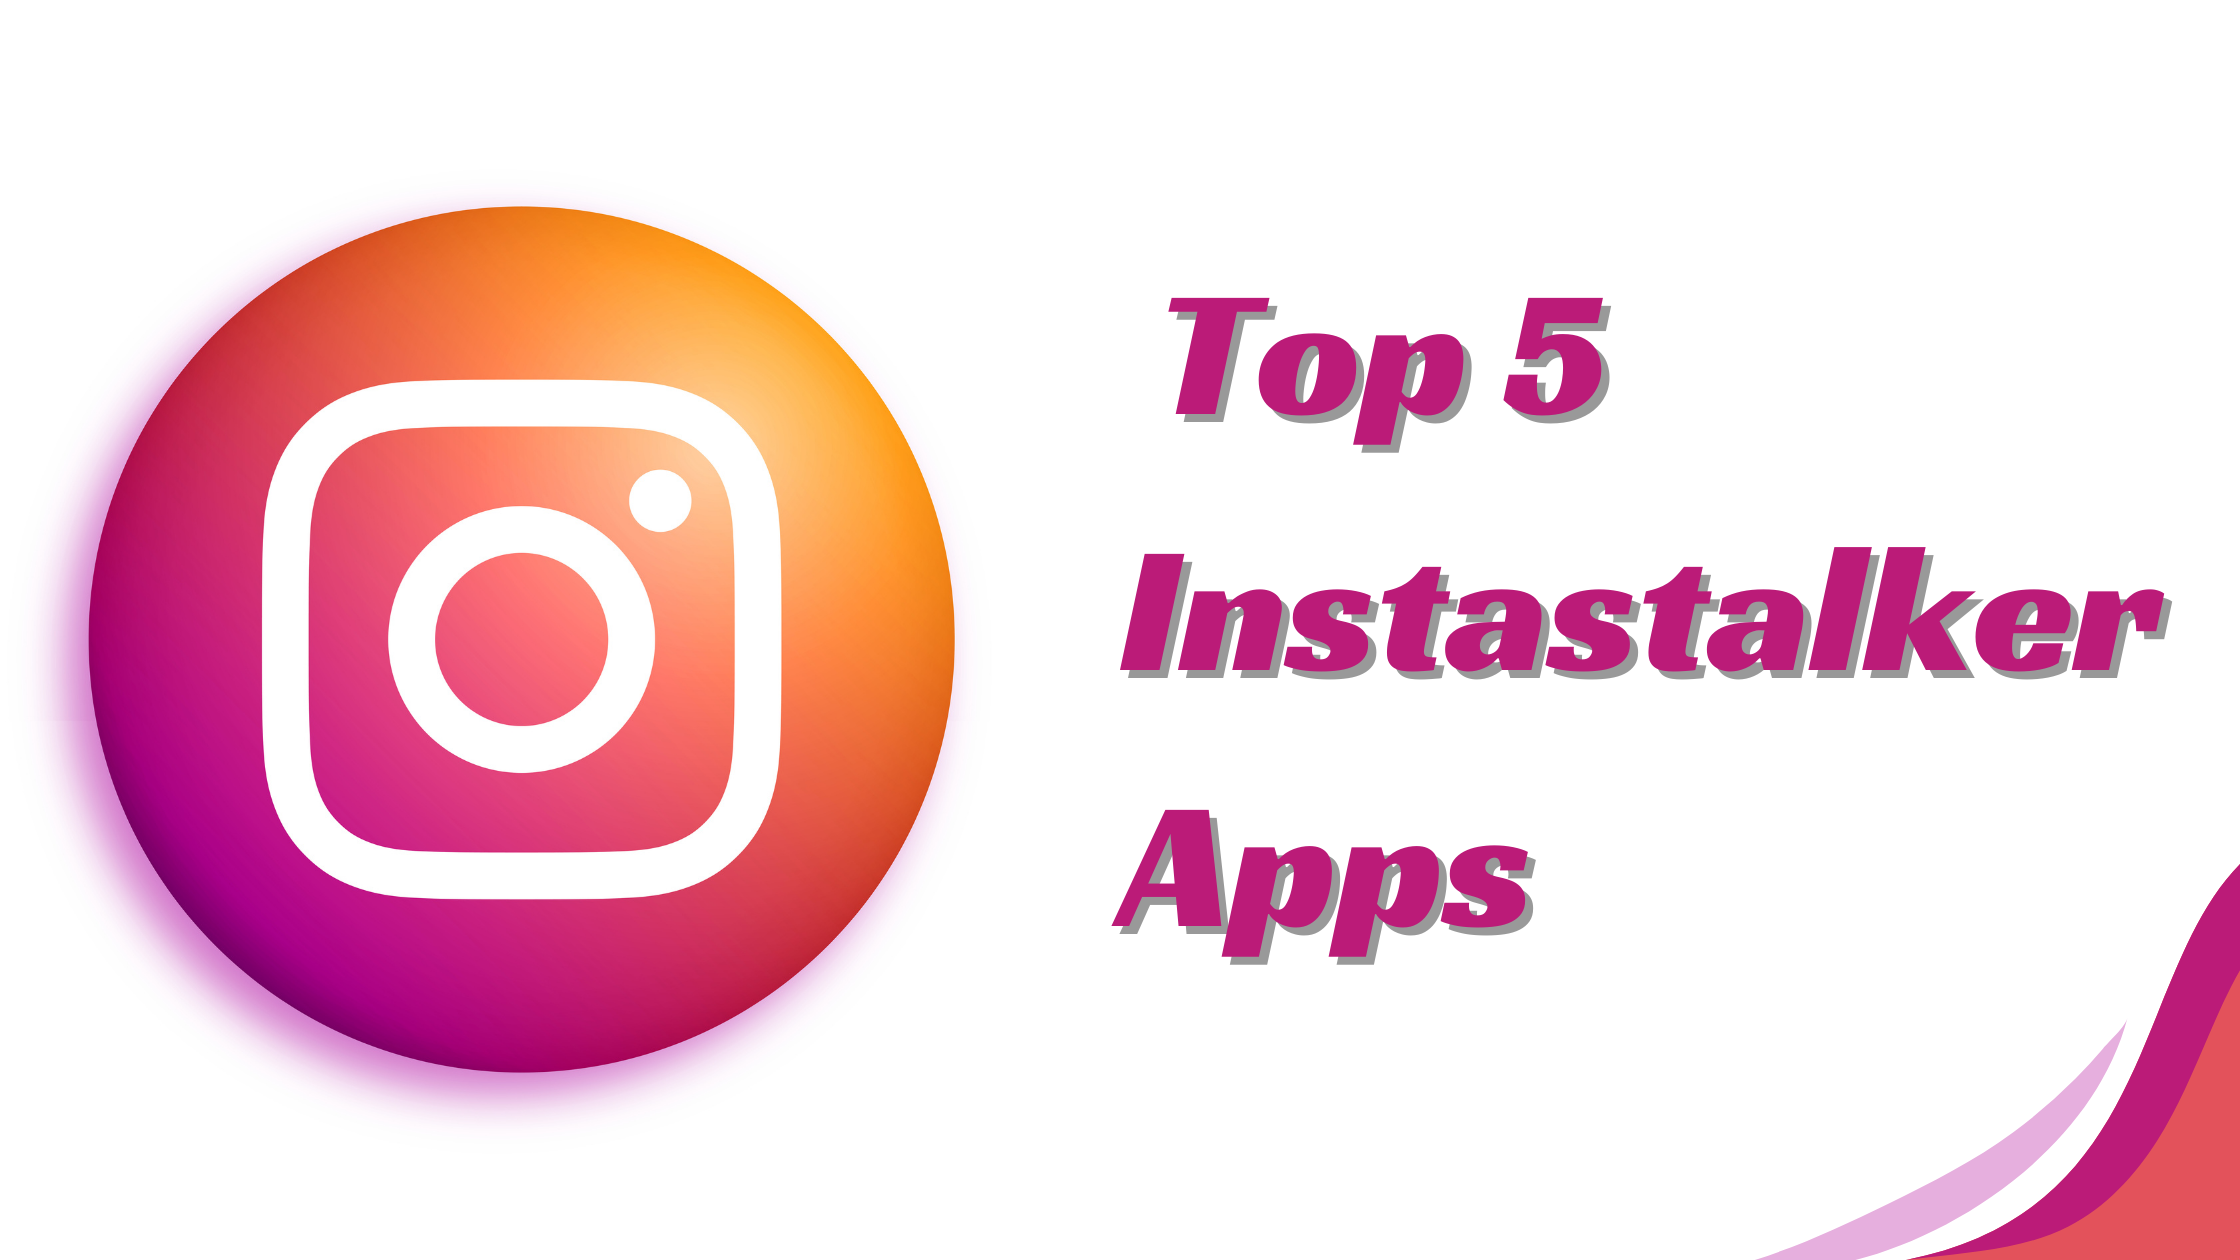 What Is Instastalker? Top 5 Instastalker Apps?